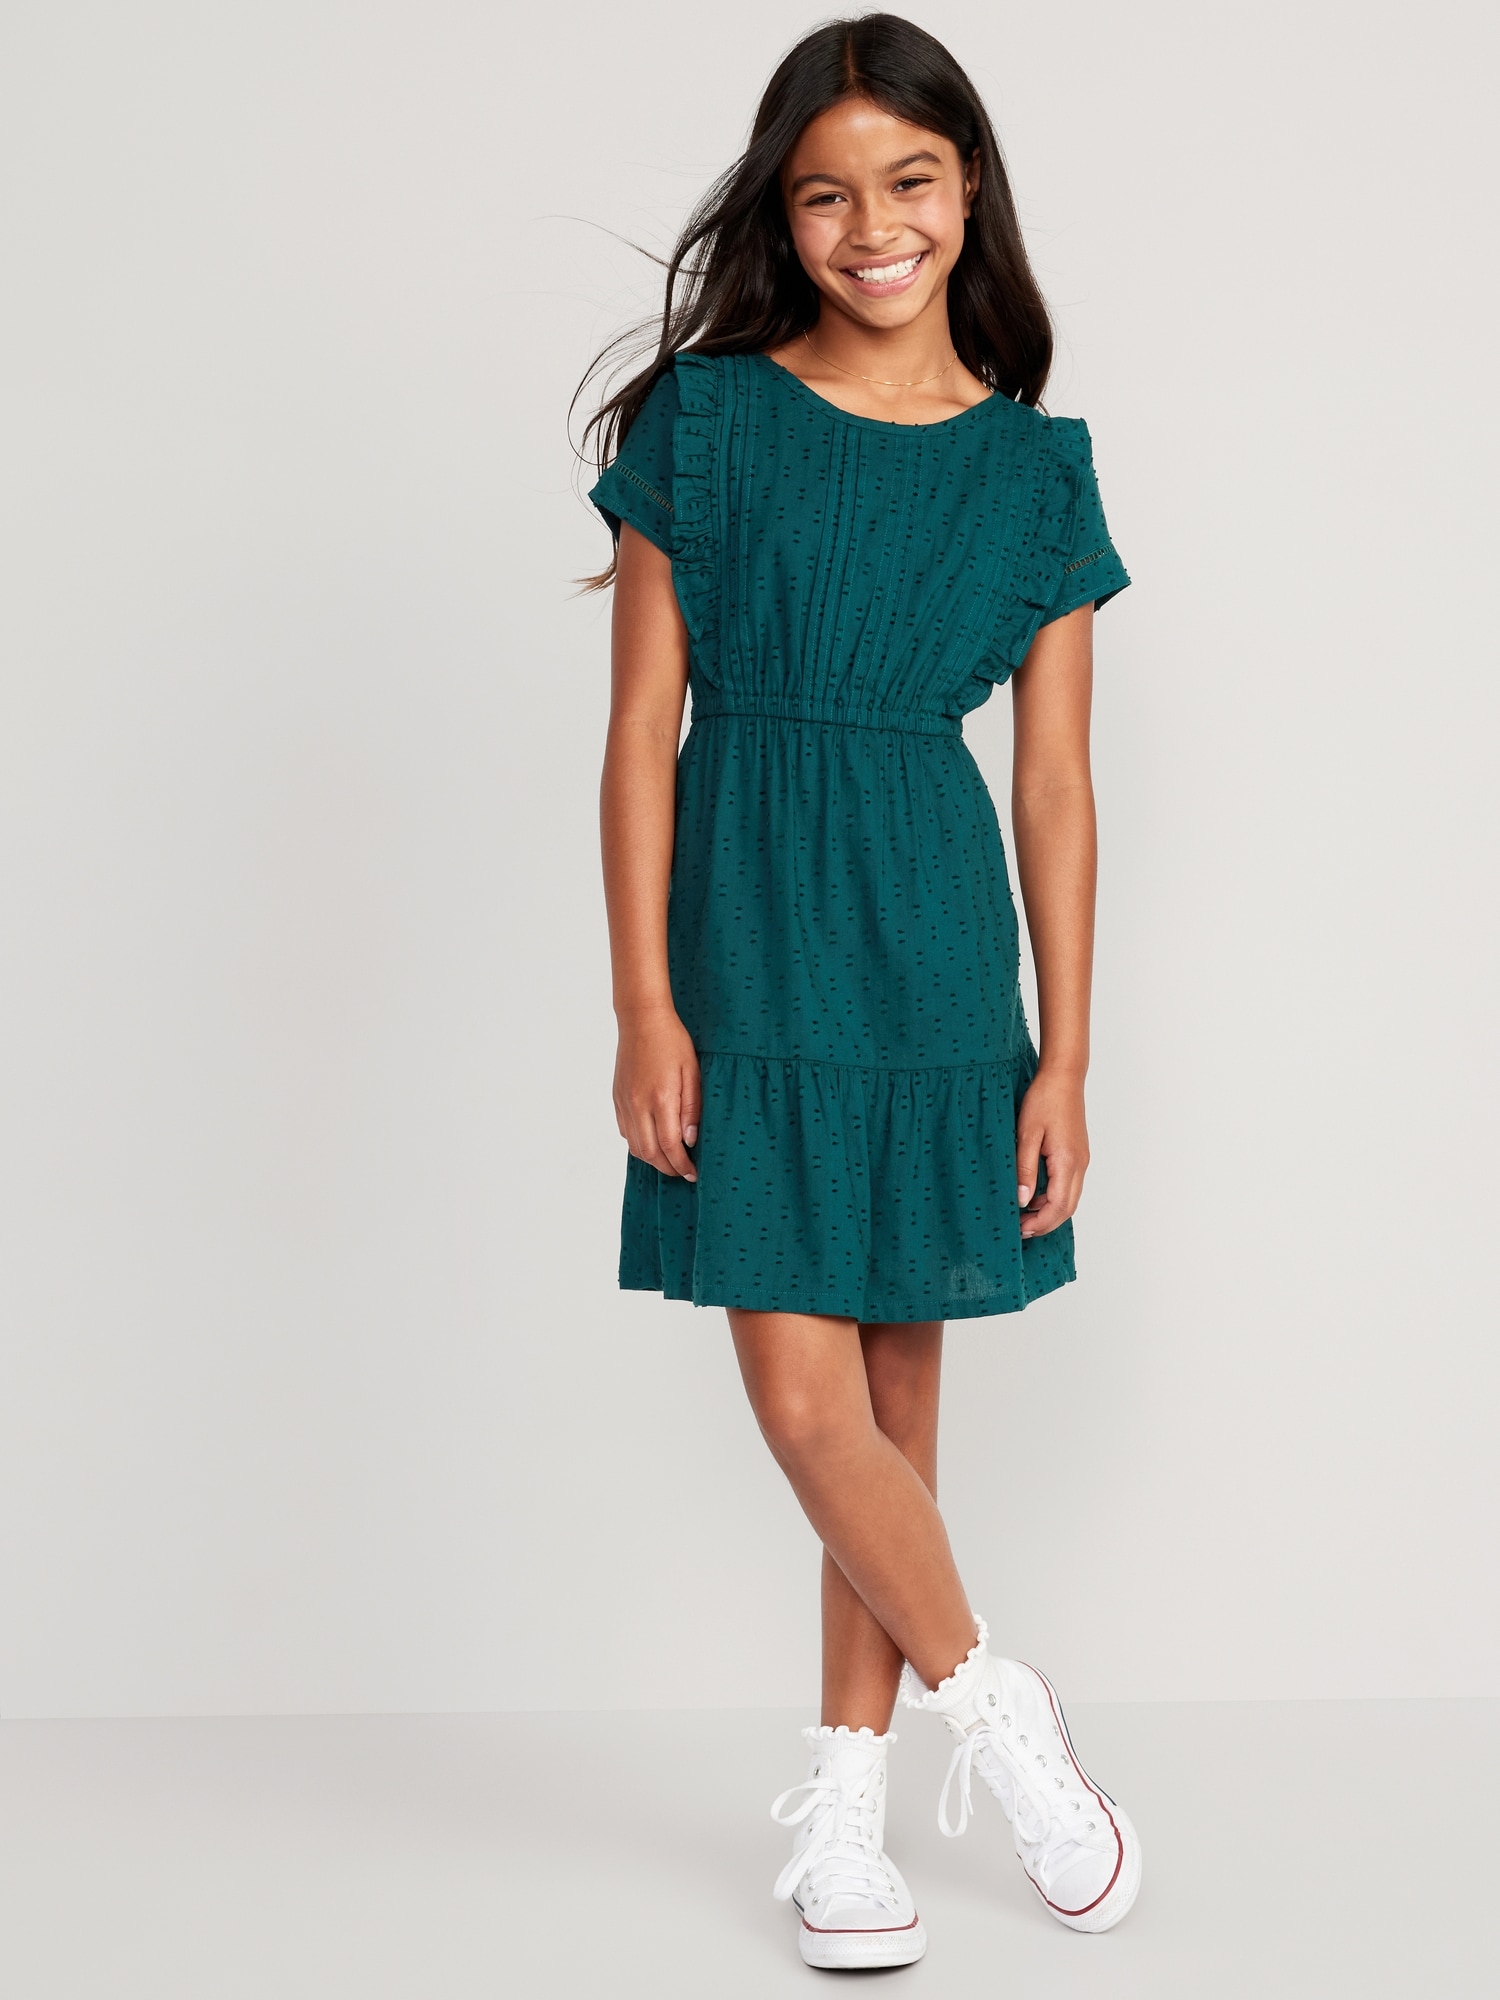 Short-Sleeve Ruffle-Trim Clip-Dot Fit & Flare Dress for Girls